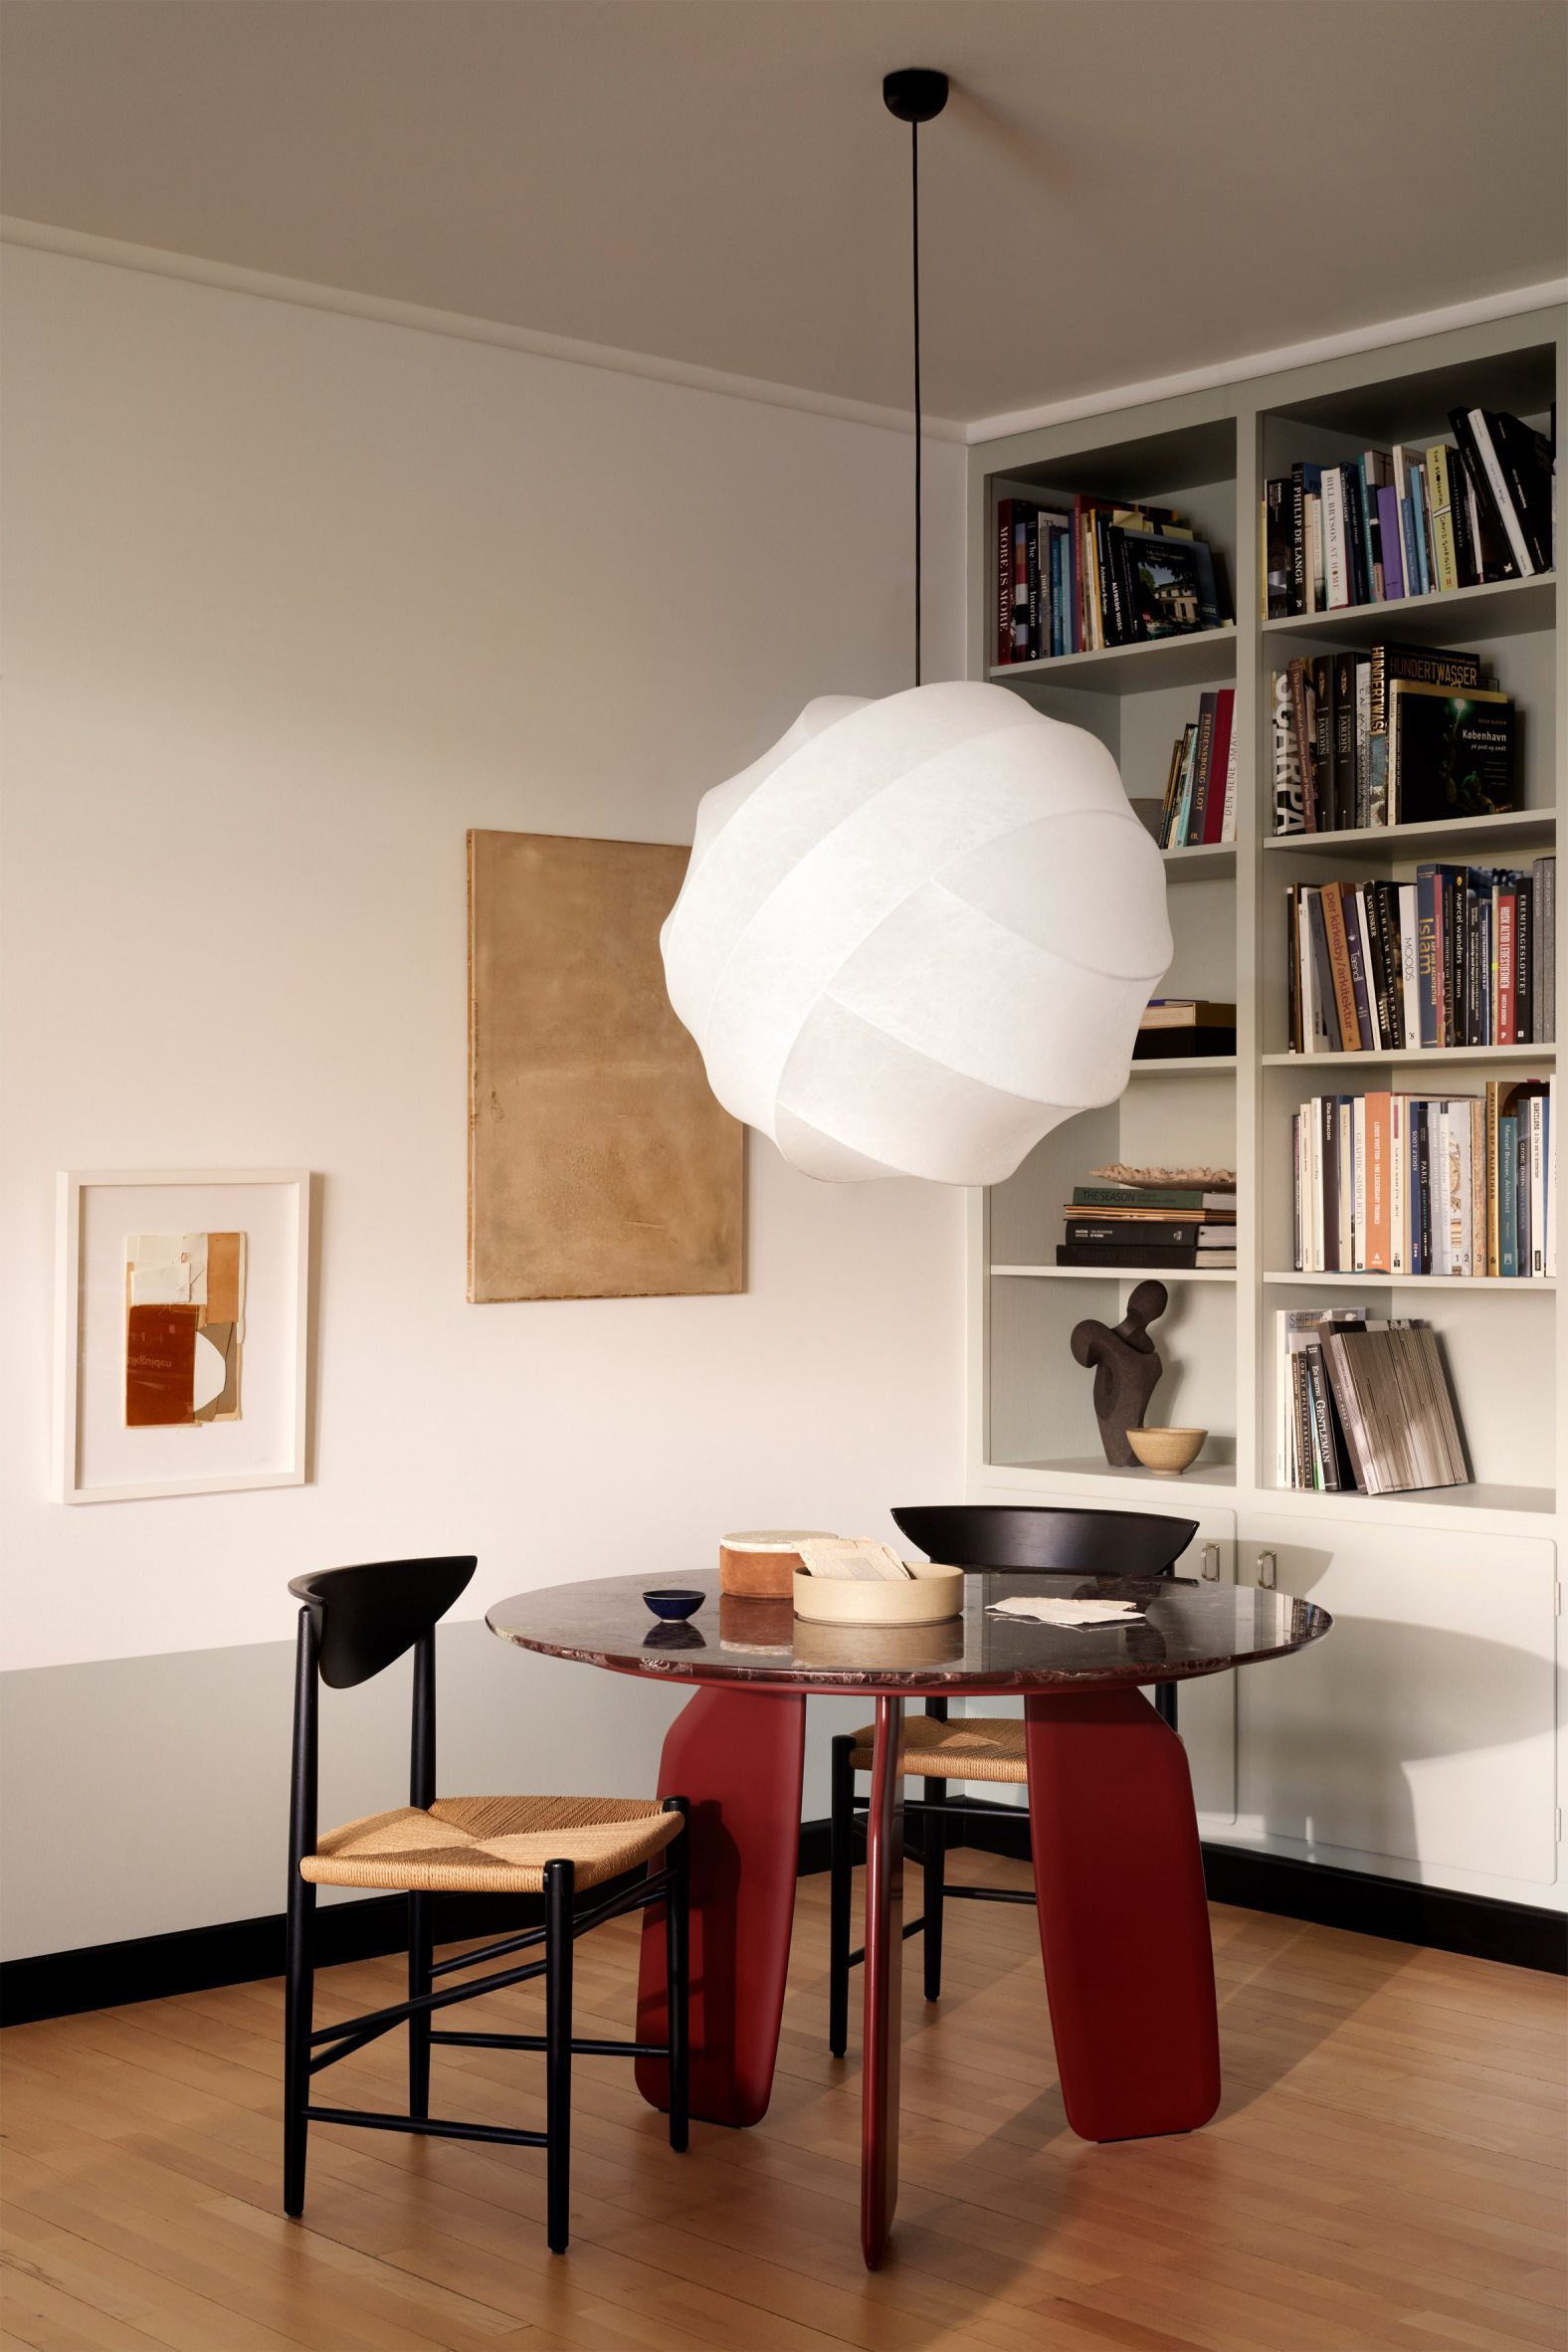 Turner pendant light in a kitchen